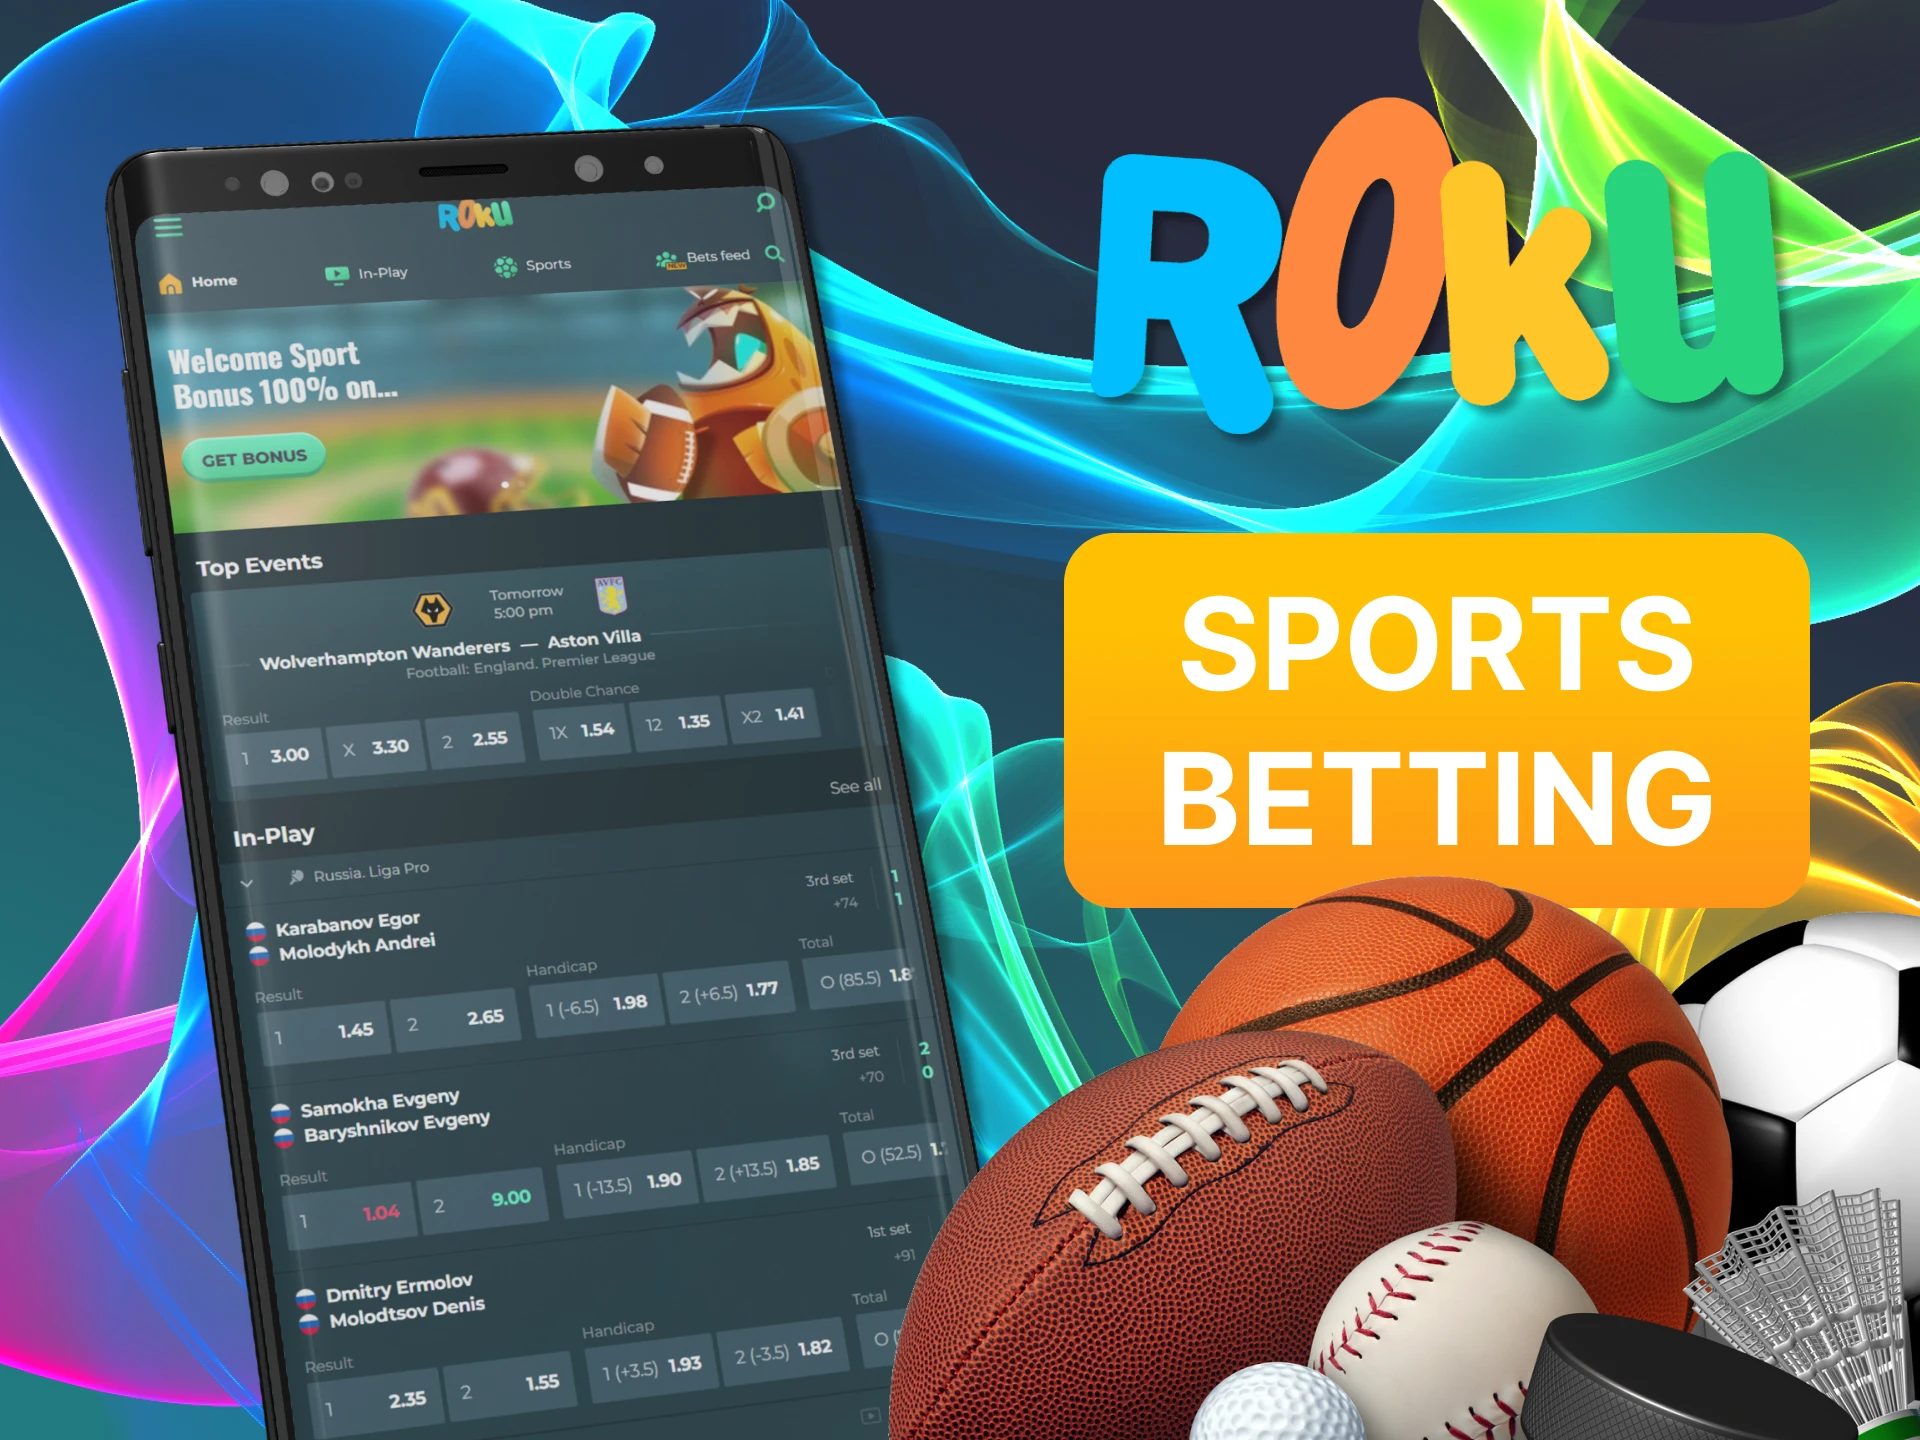 Bet on sports in the Rokubet app.